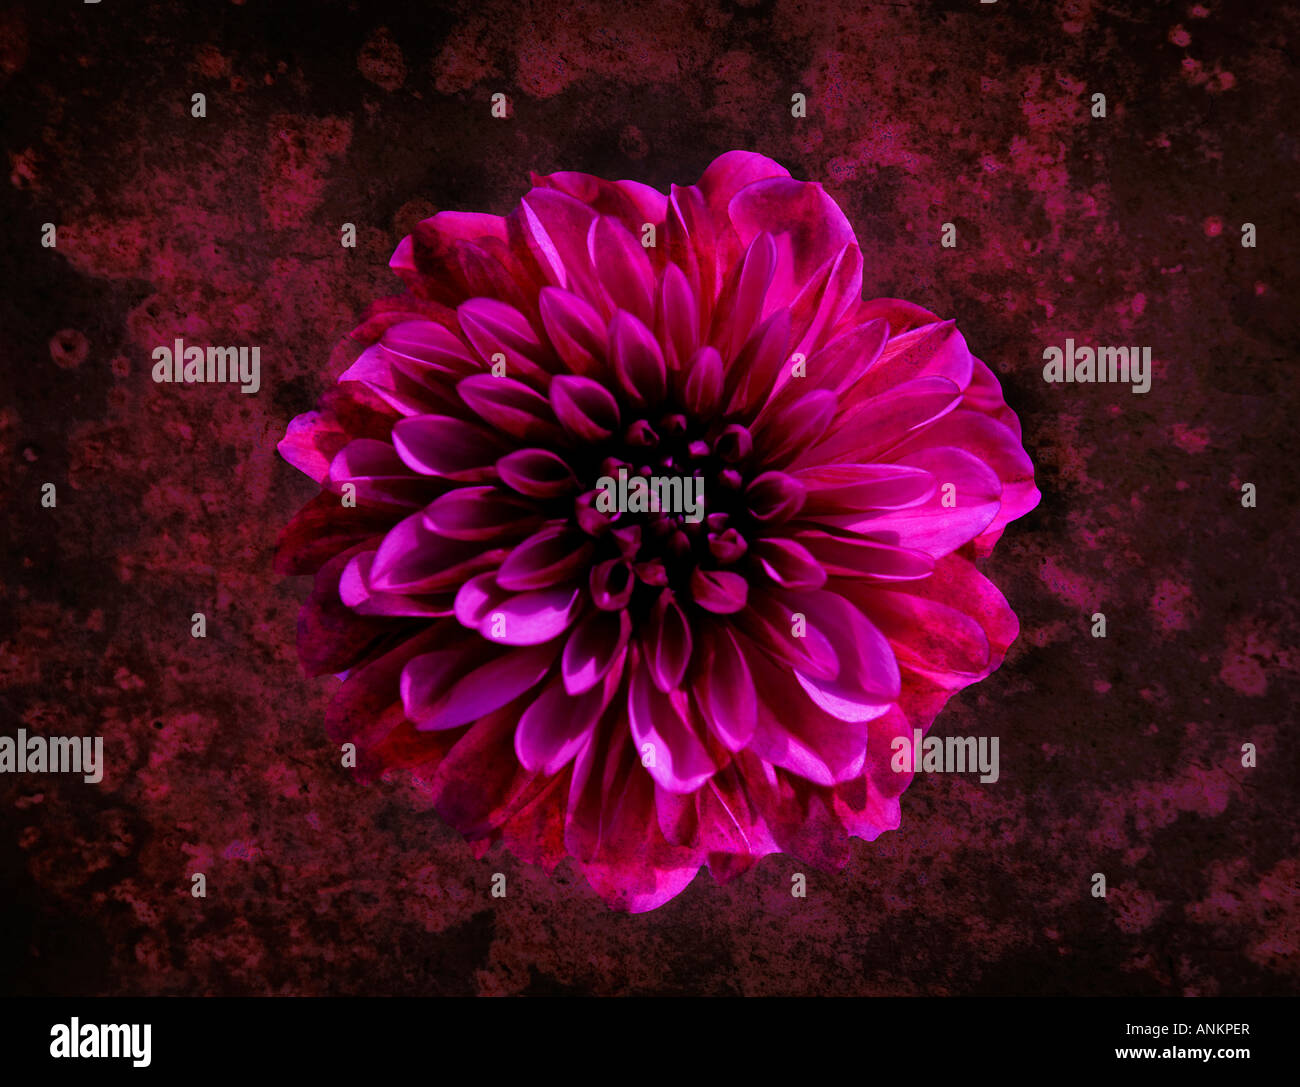 Foto-Illustration einer rosa Blume Dahlie Stockfoto